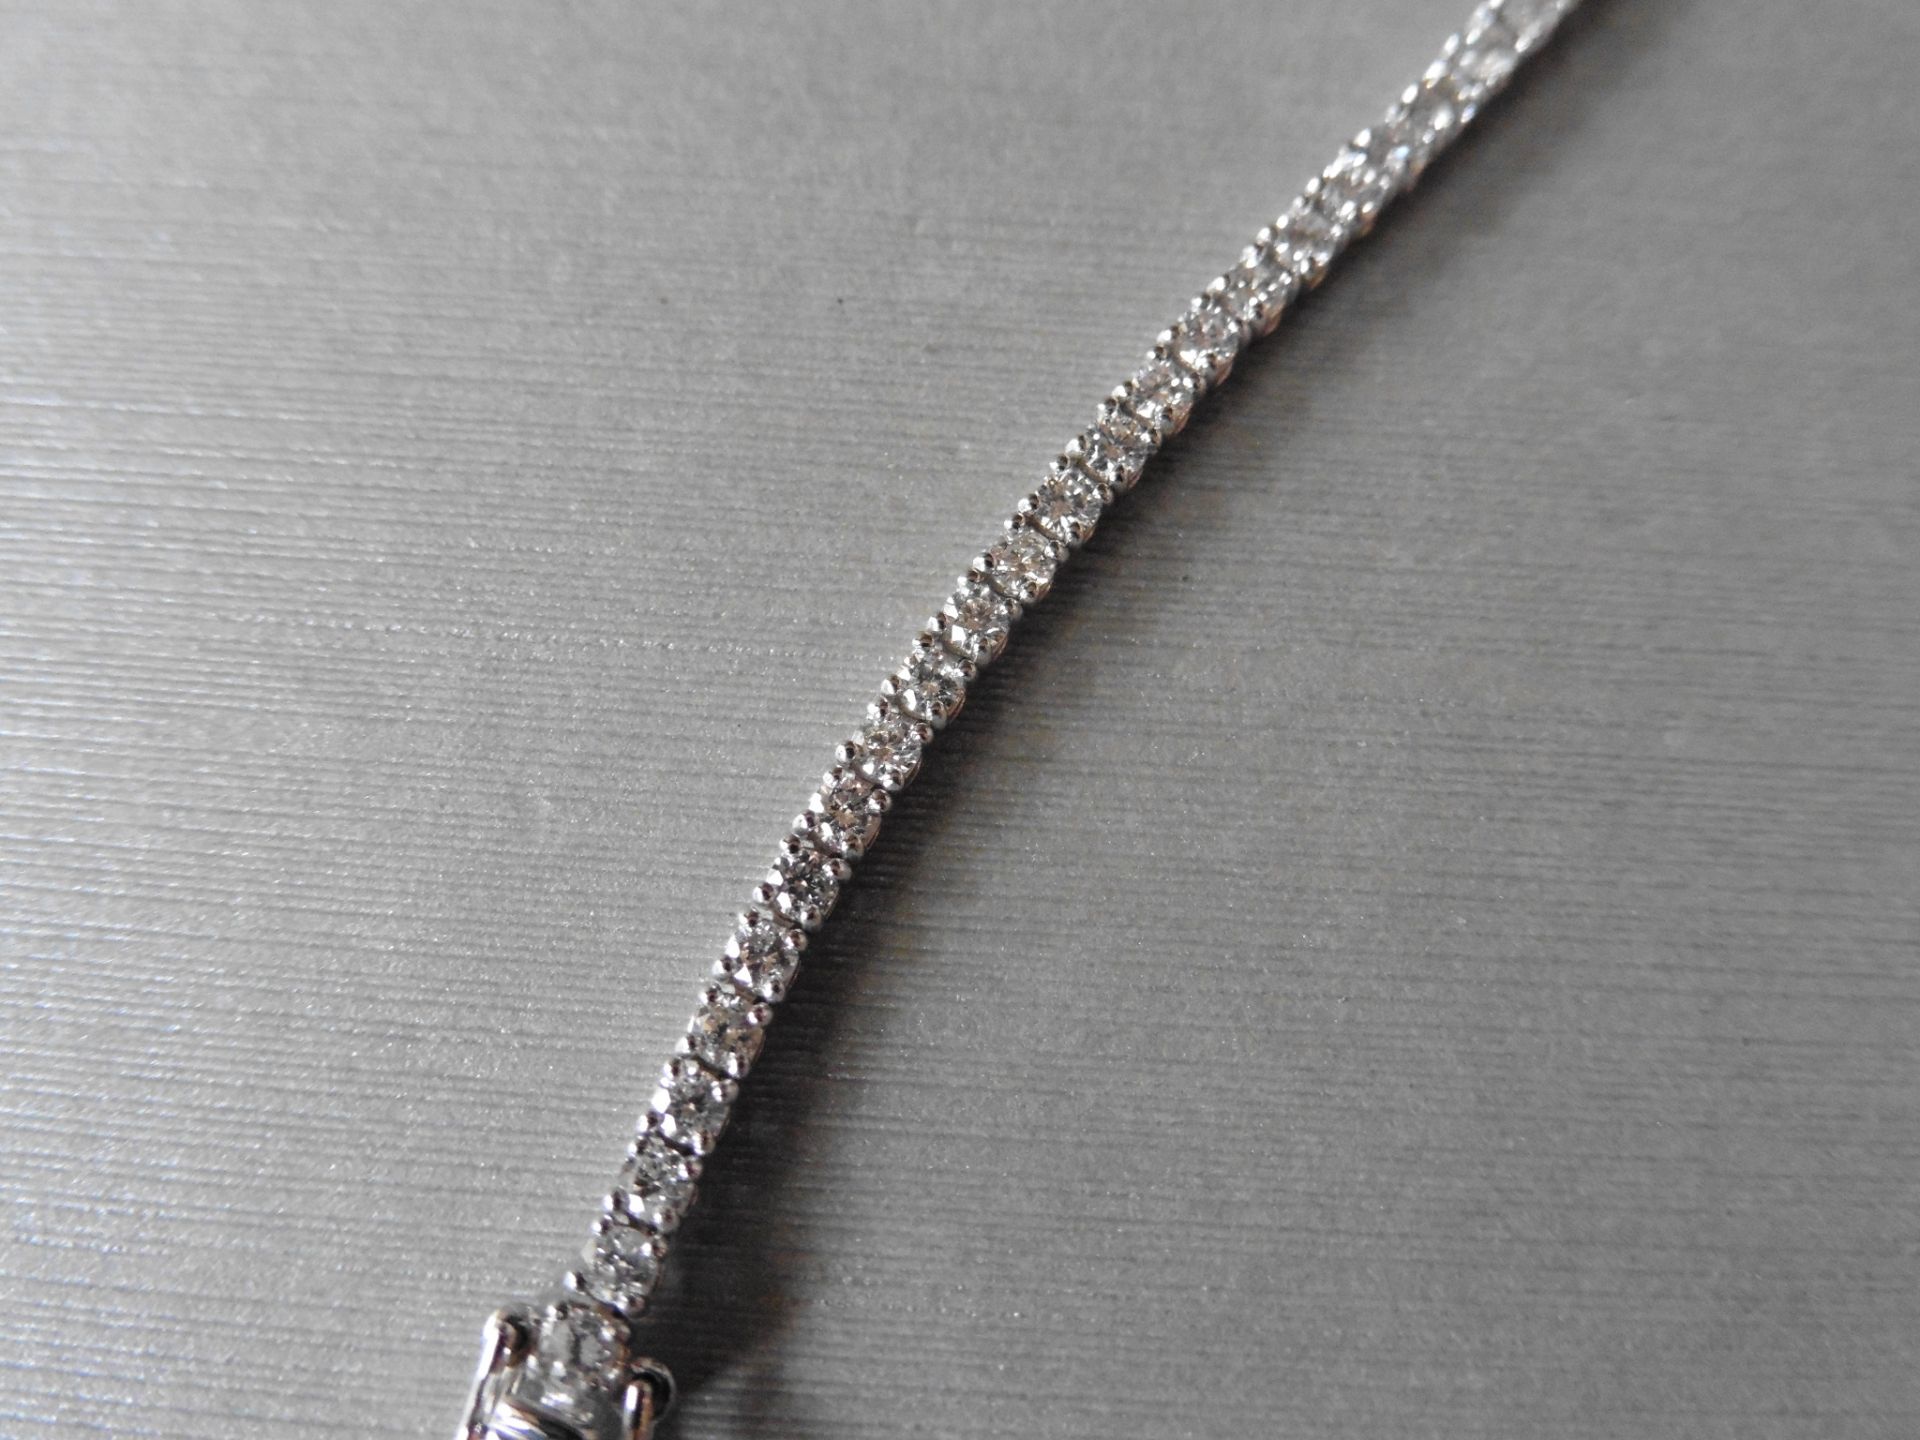 4.50ct Diamond tennis bracelet set with brilliant cut diamonds of H/I colour, si3 clarity. All set